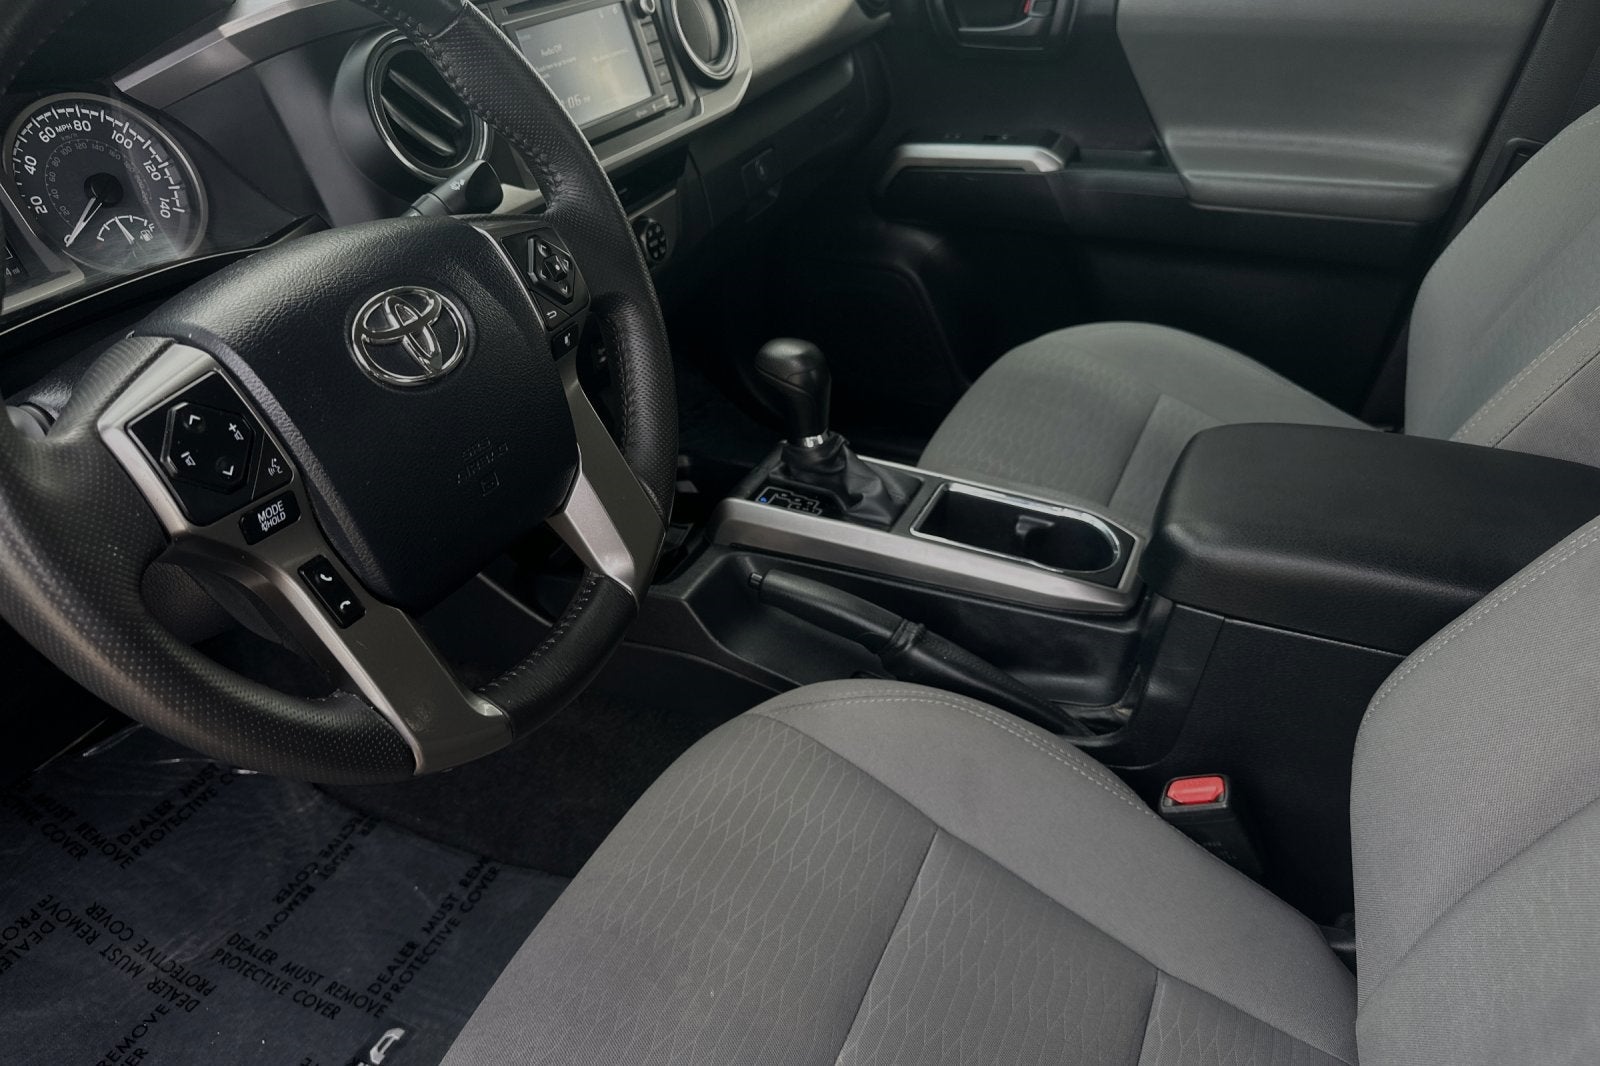 2017 Toyota Tacoma SR5 Access Cab 6' Bed V6 4x2 AT